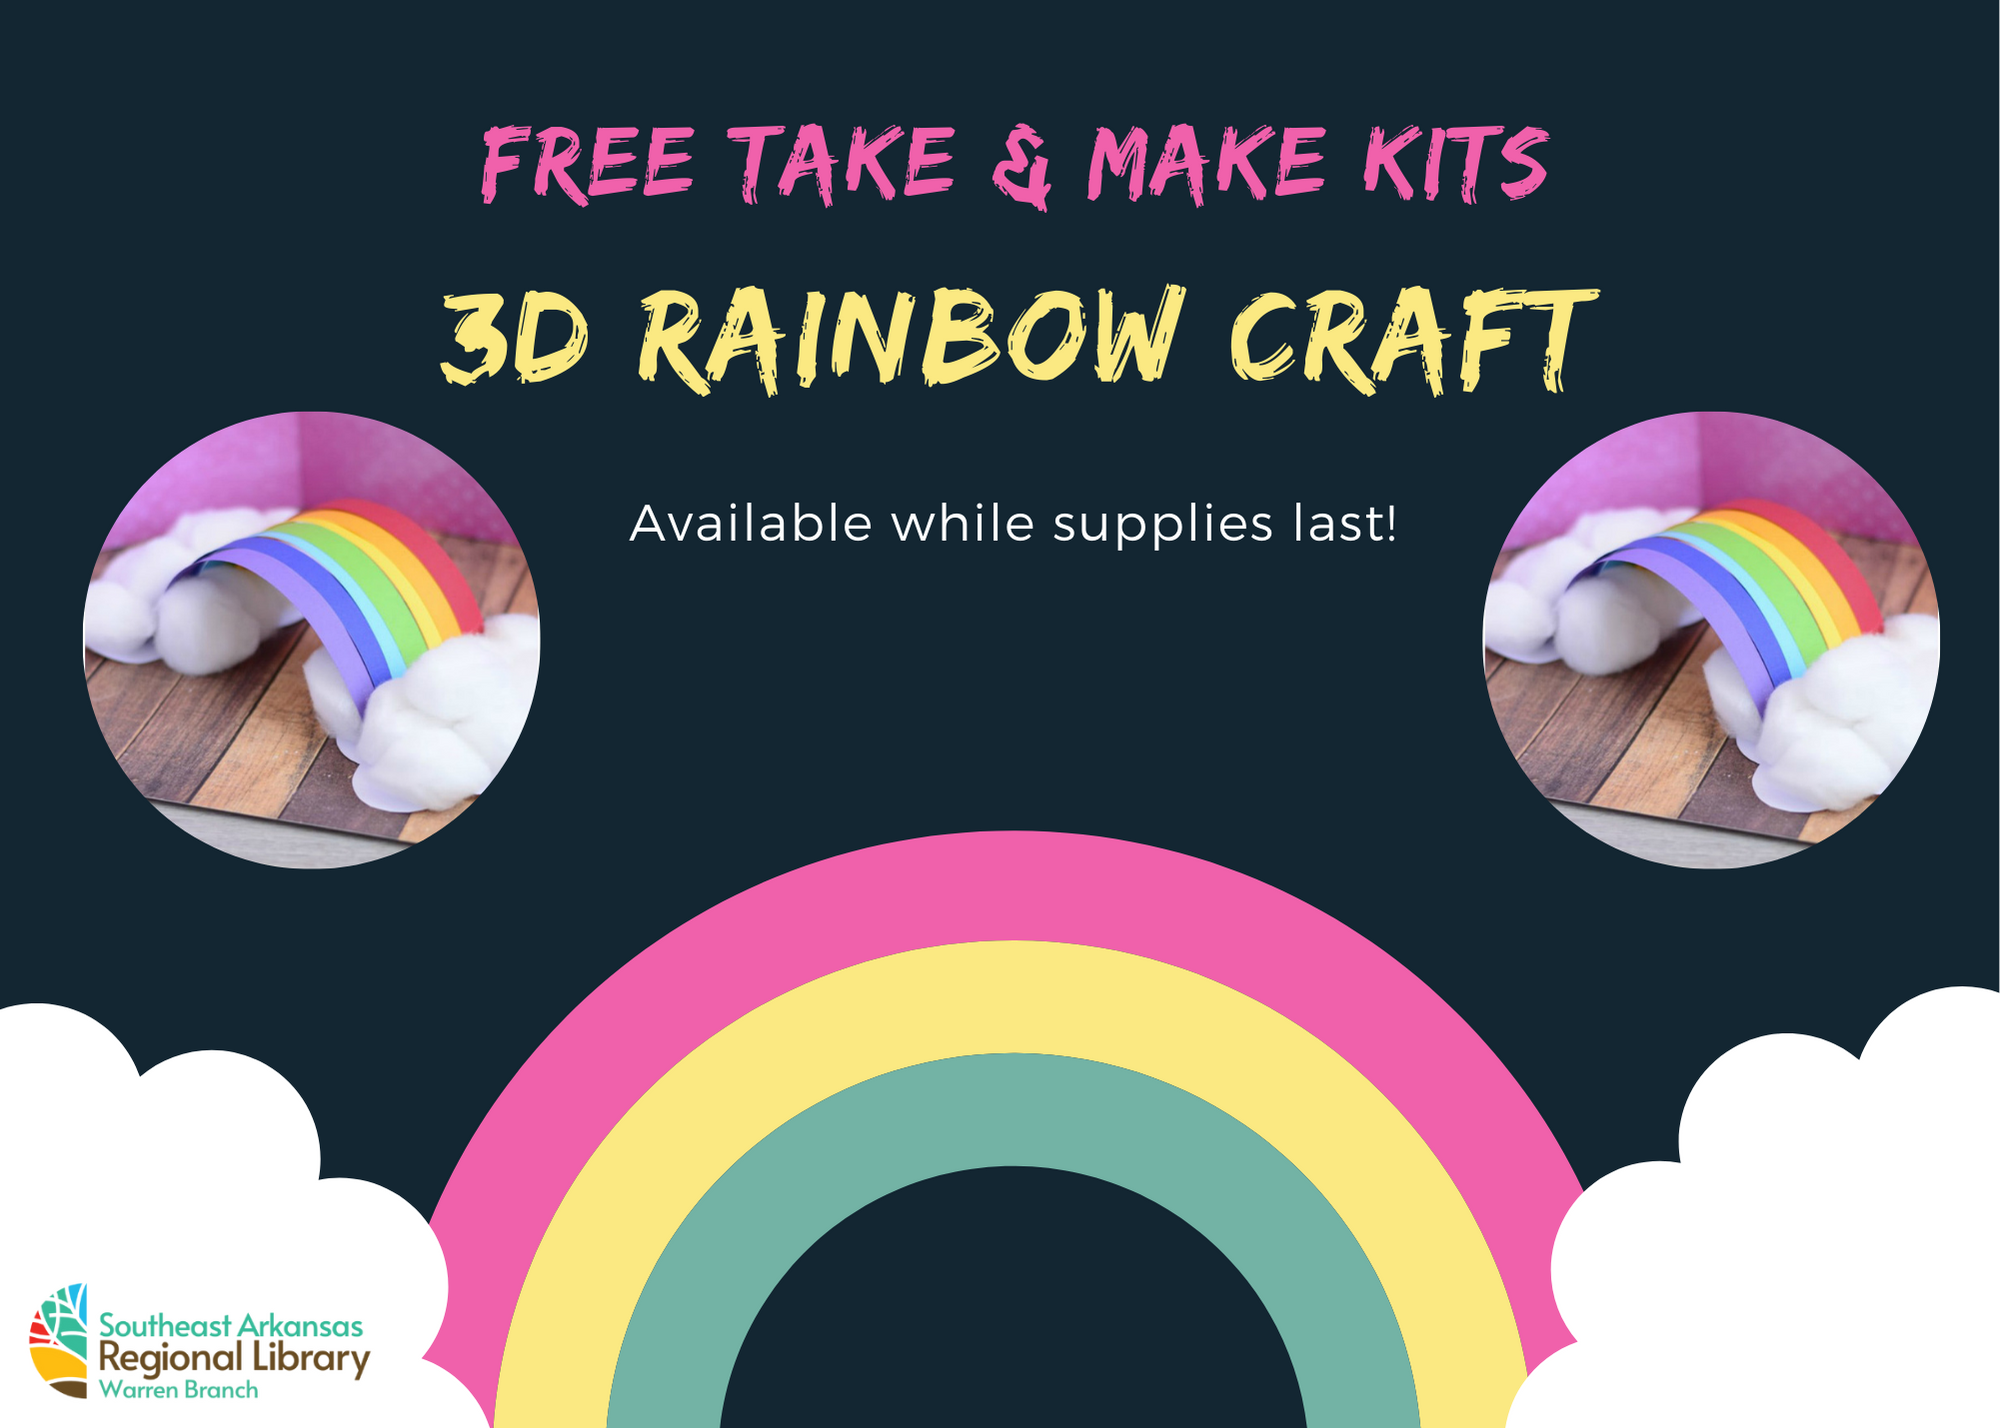 3D Rainbow Craft Take & Make